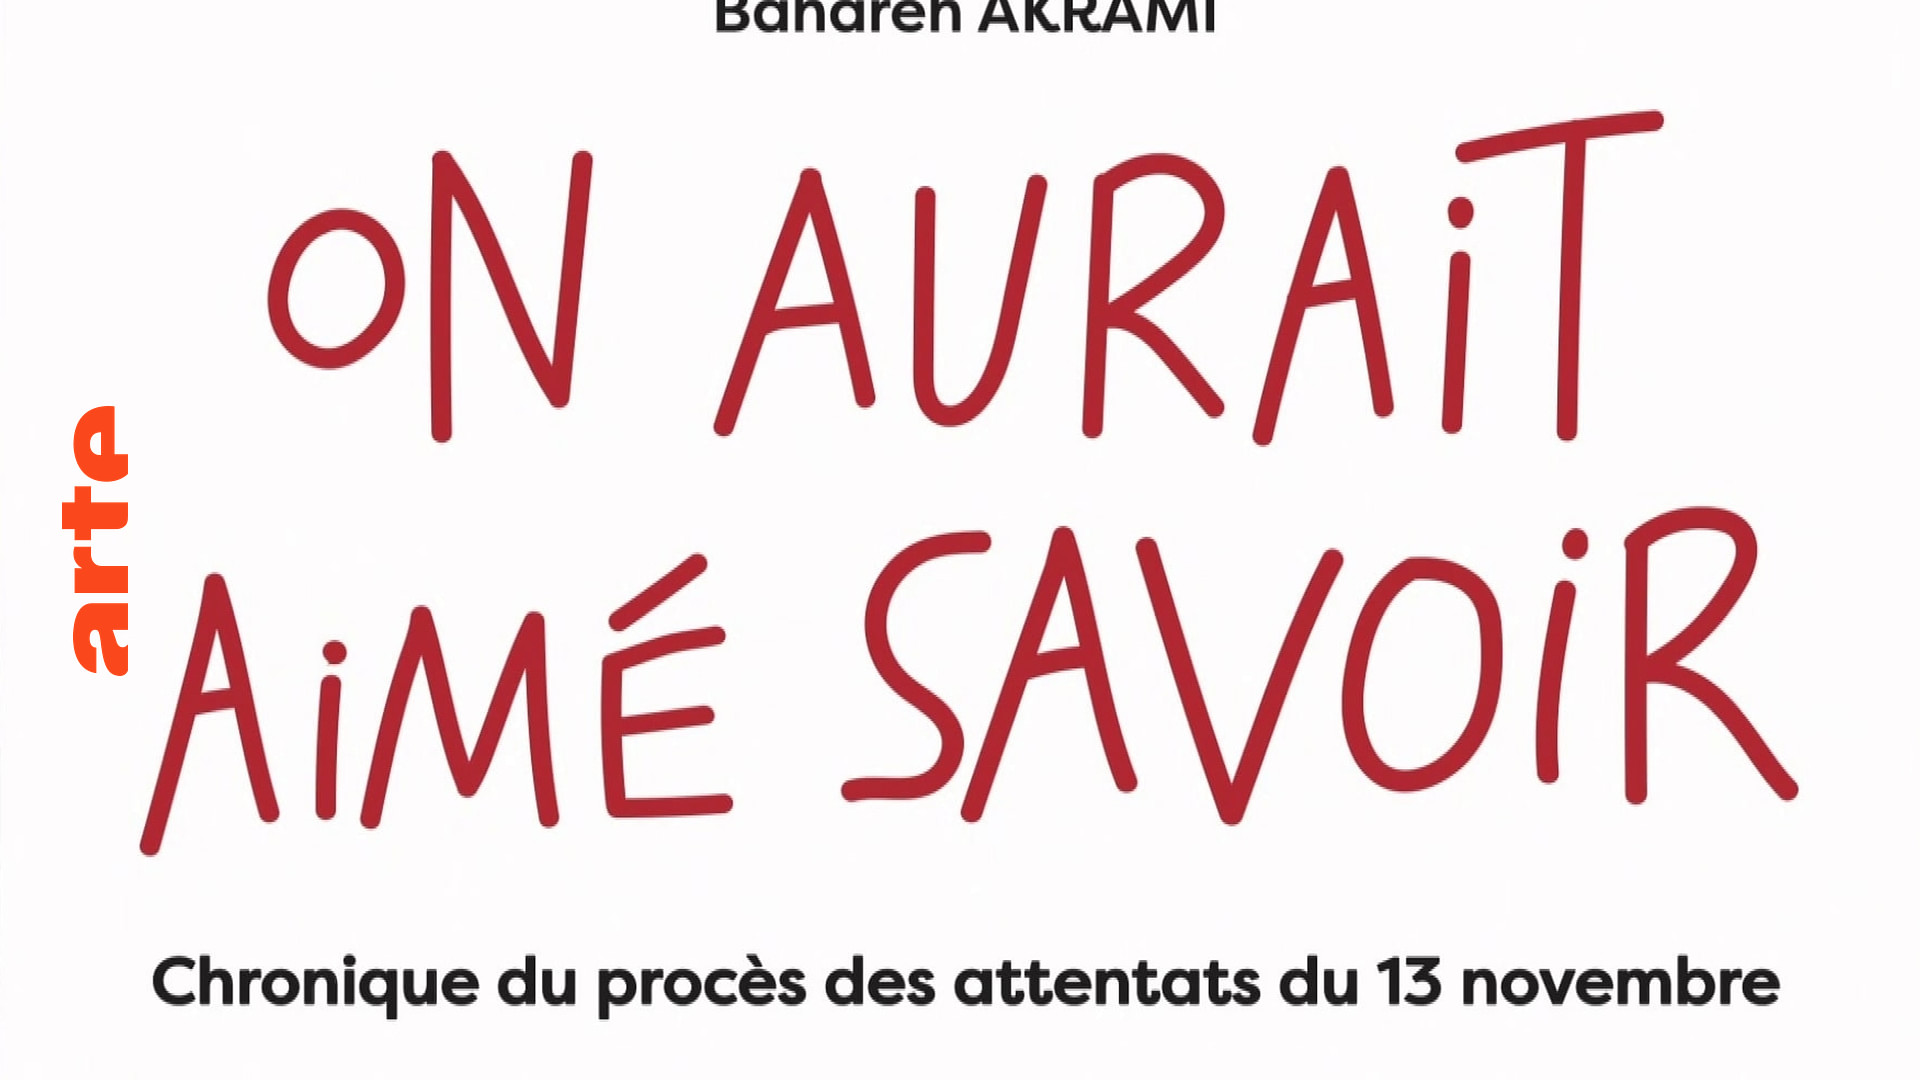 Bahareh Akrami: Graphic Novel über Pariser Terrorprozess